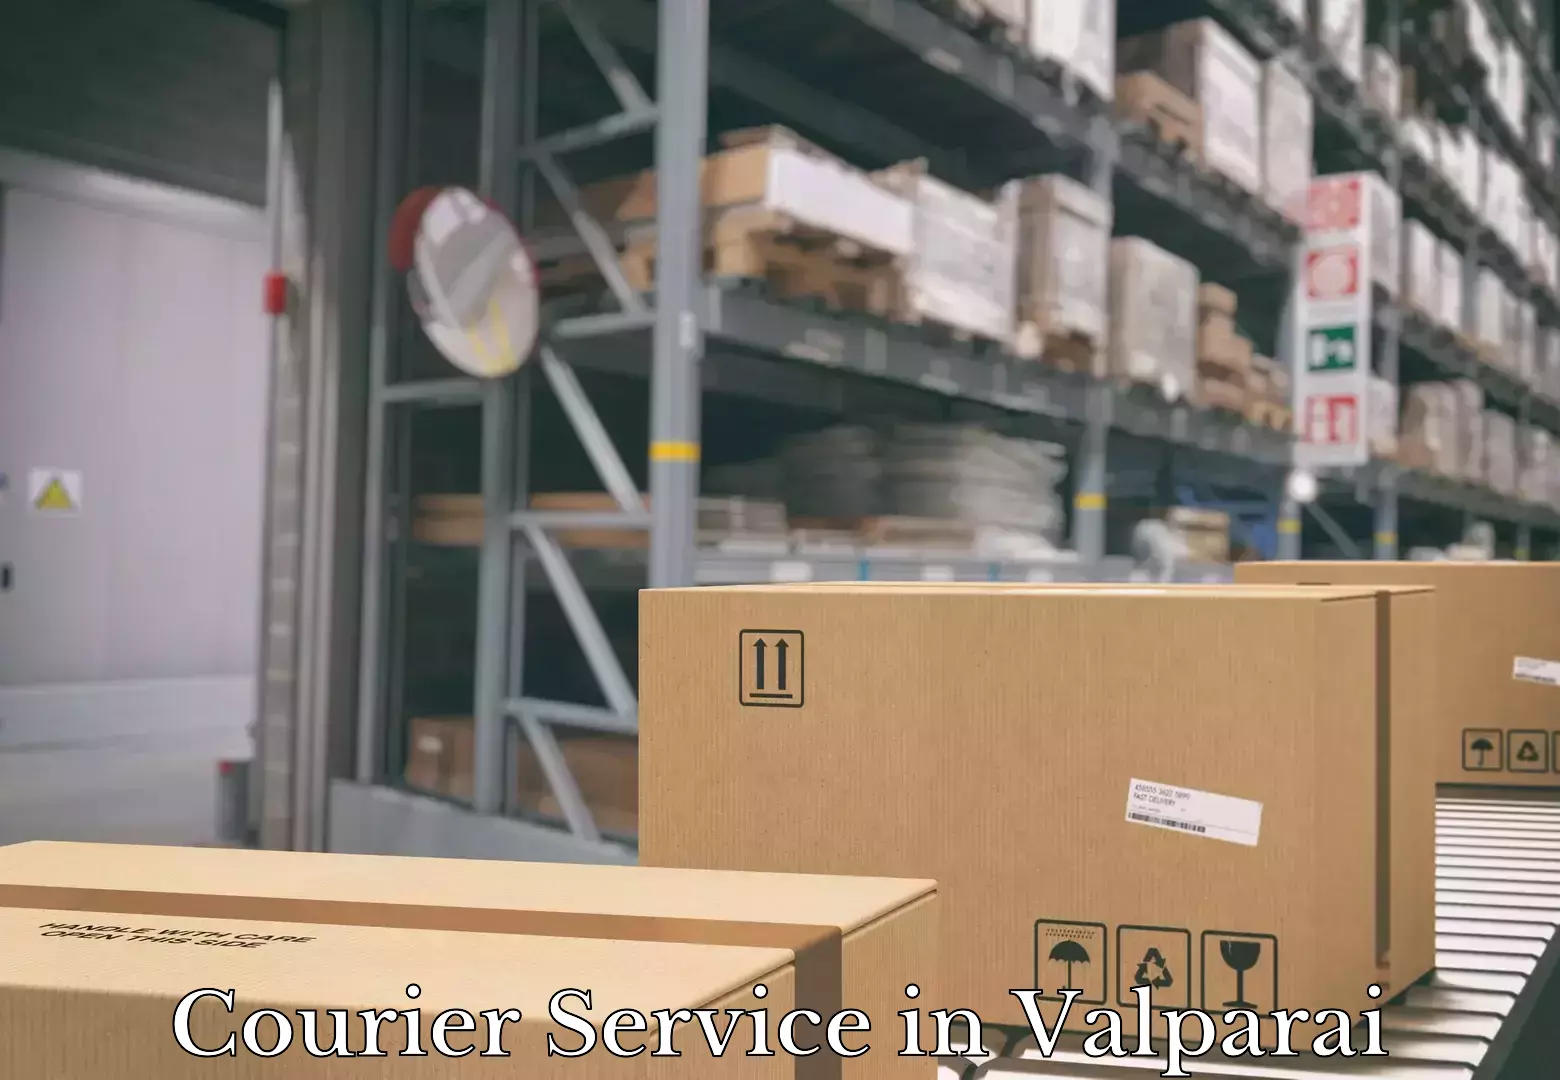 Delivery service partnership in Valparai